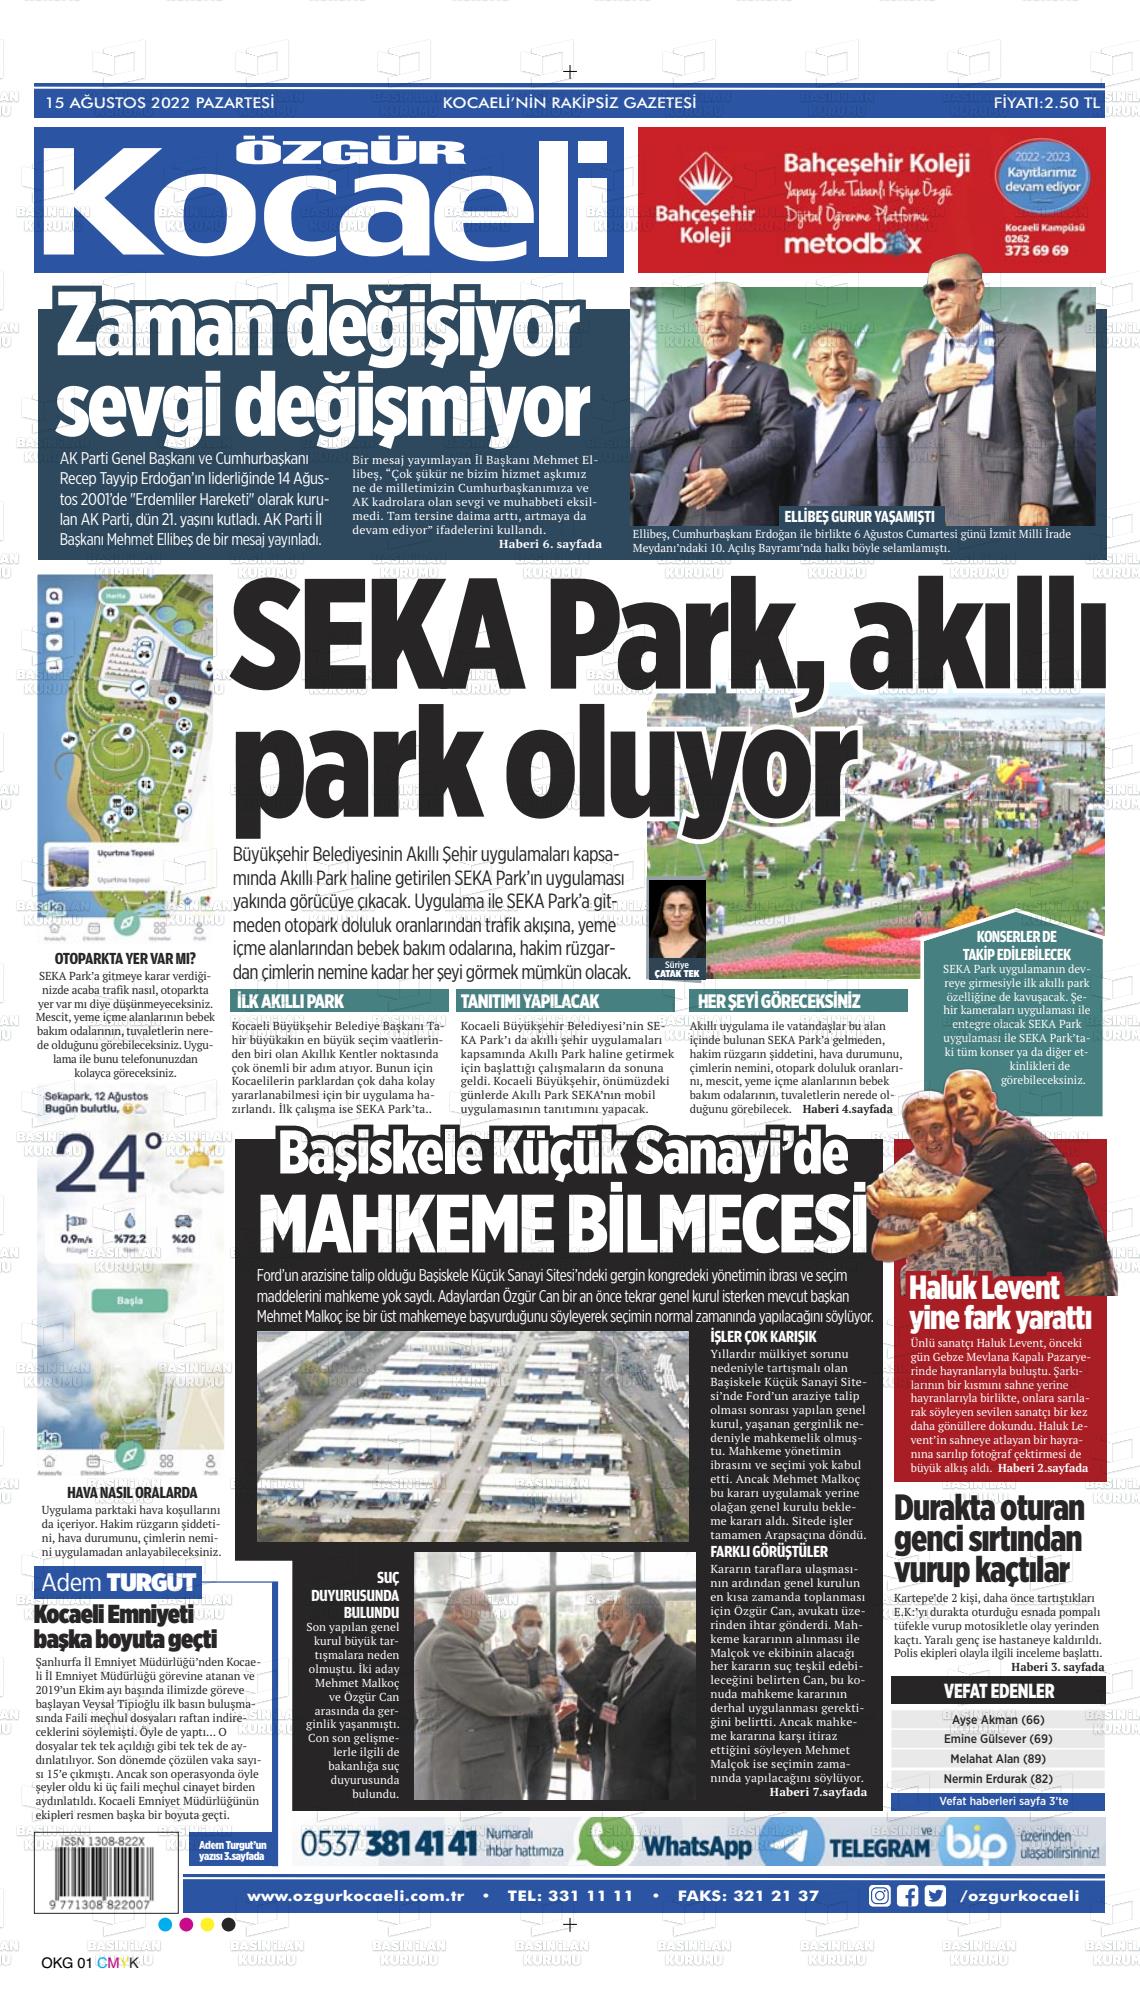 15 Ağustos 2022 Özgür Kocaeli Gazete Manşeti